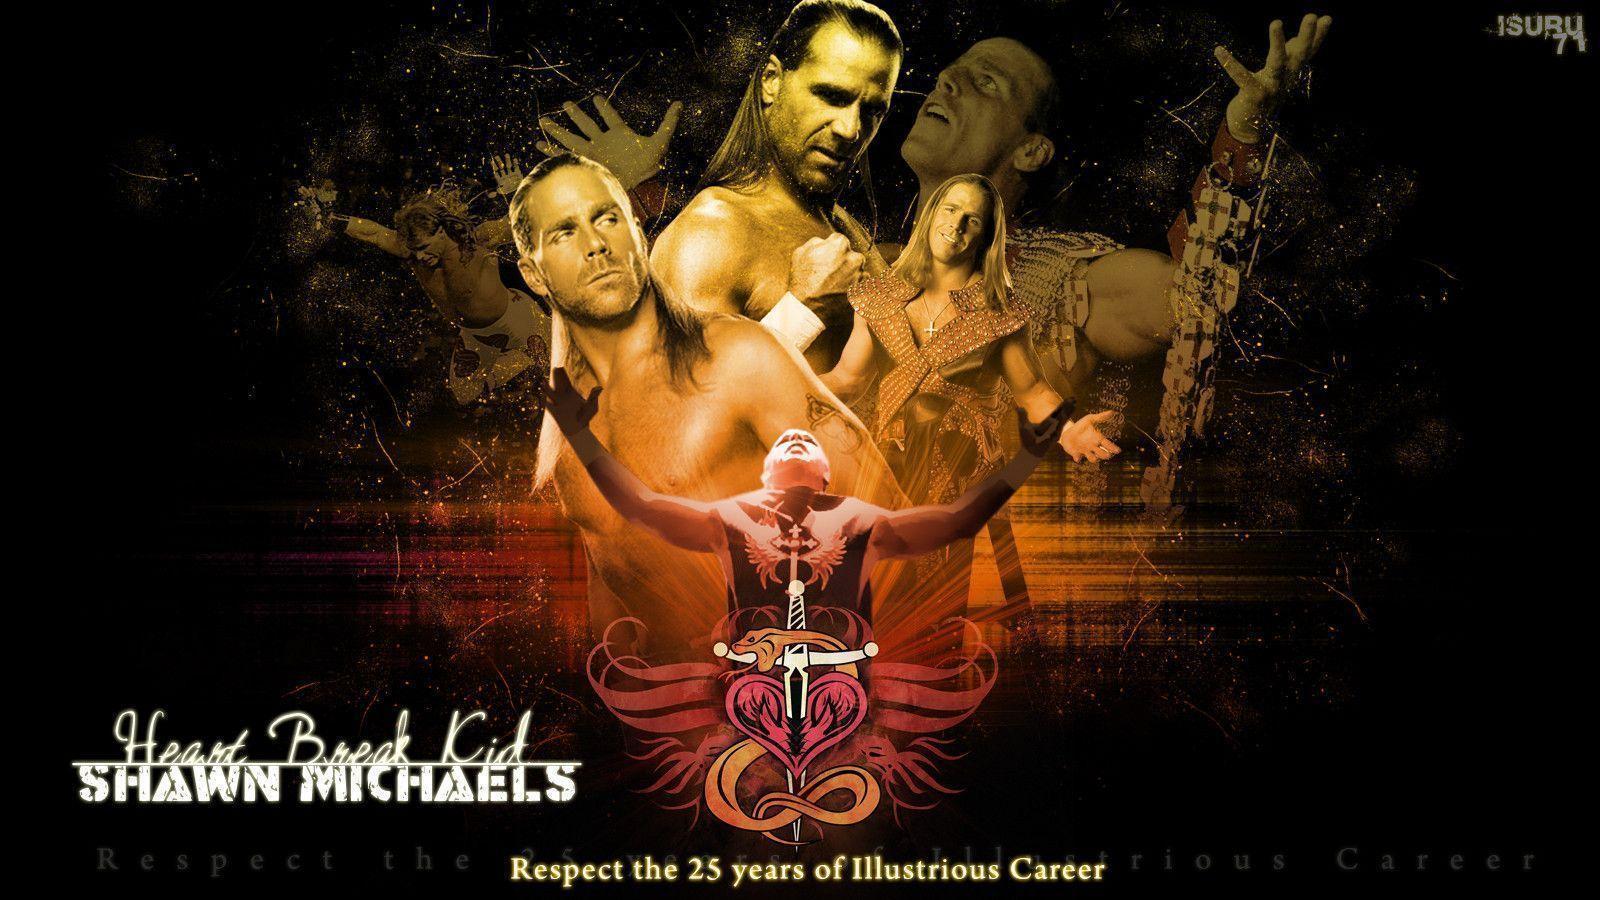 Shawn Michaels (HBK) HD Wallpaper image. Free Photo Picture